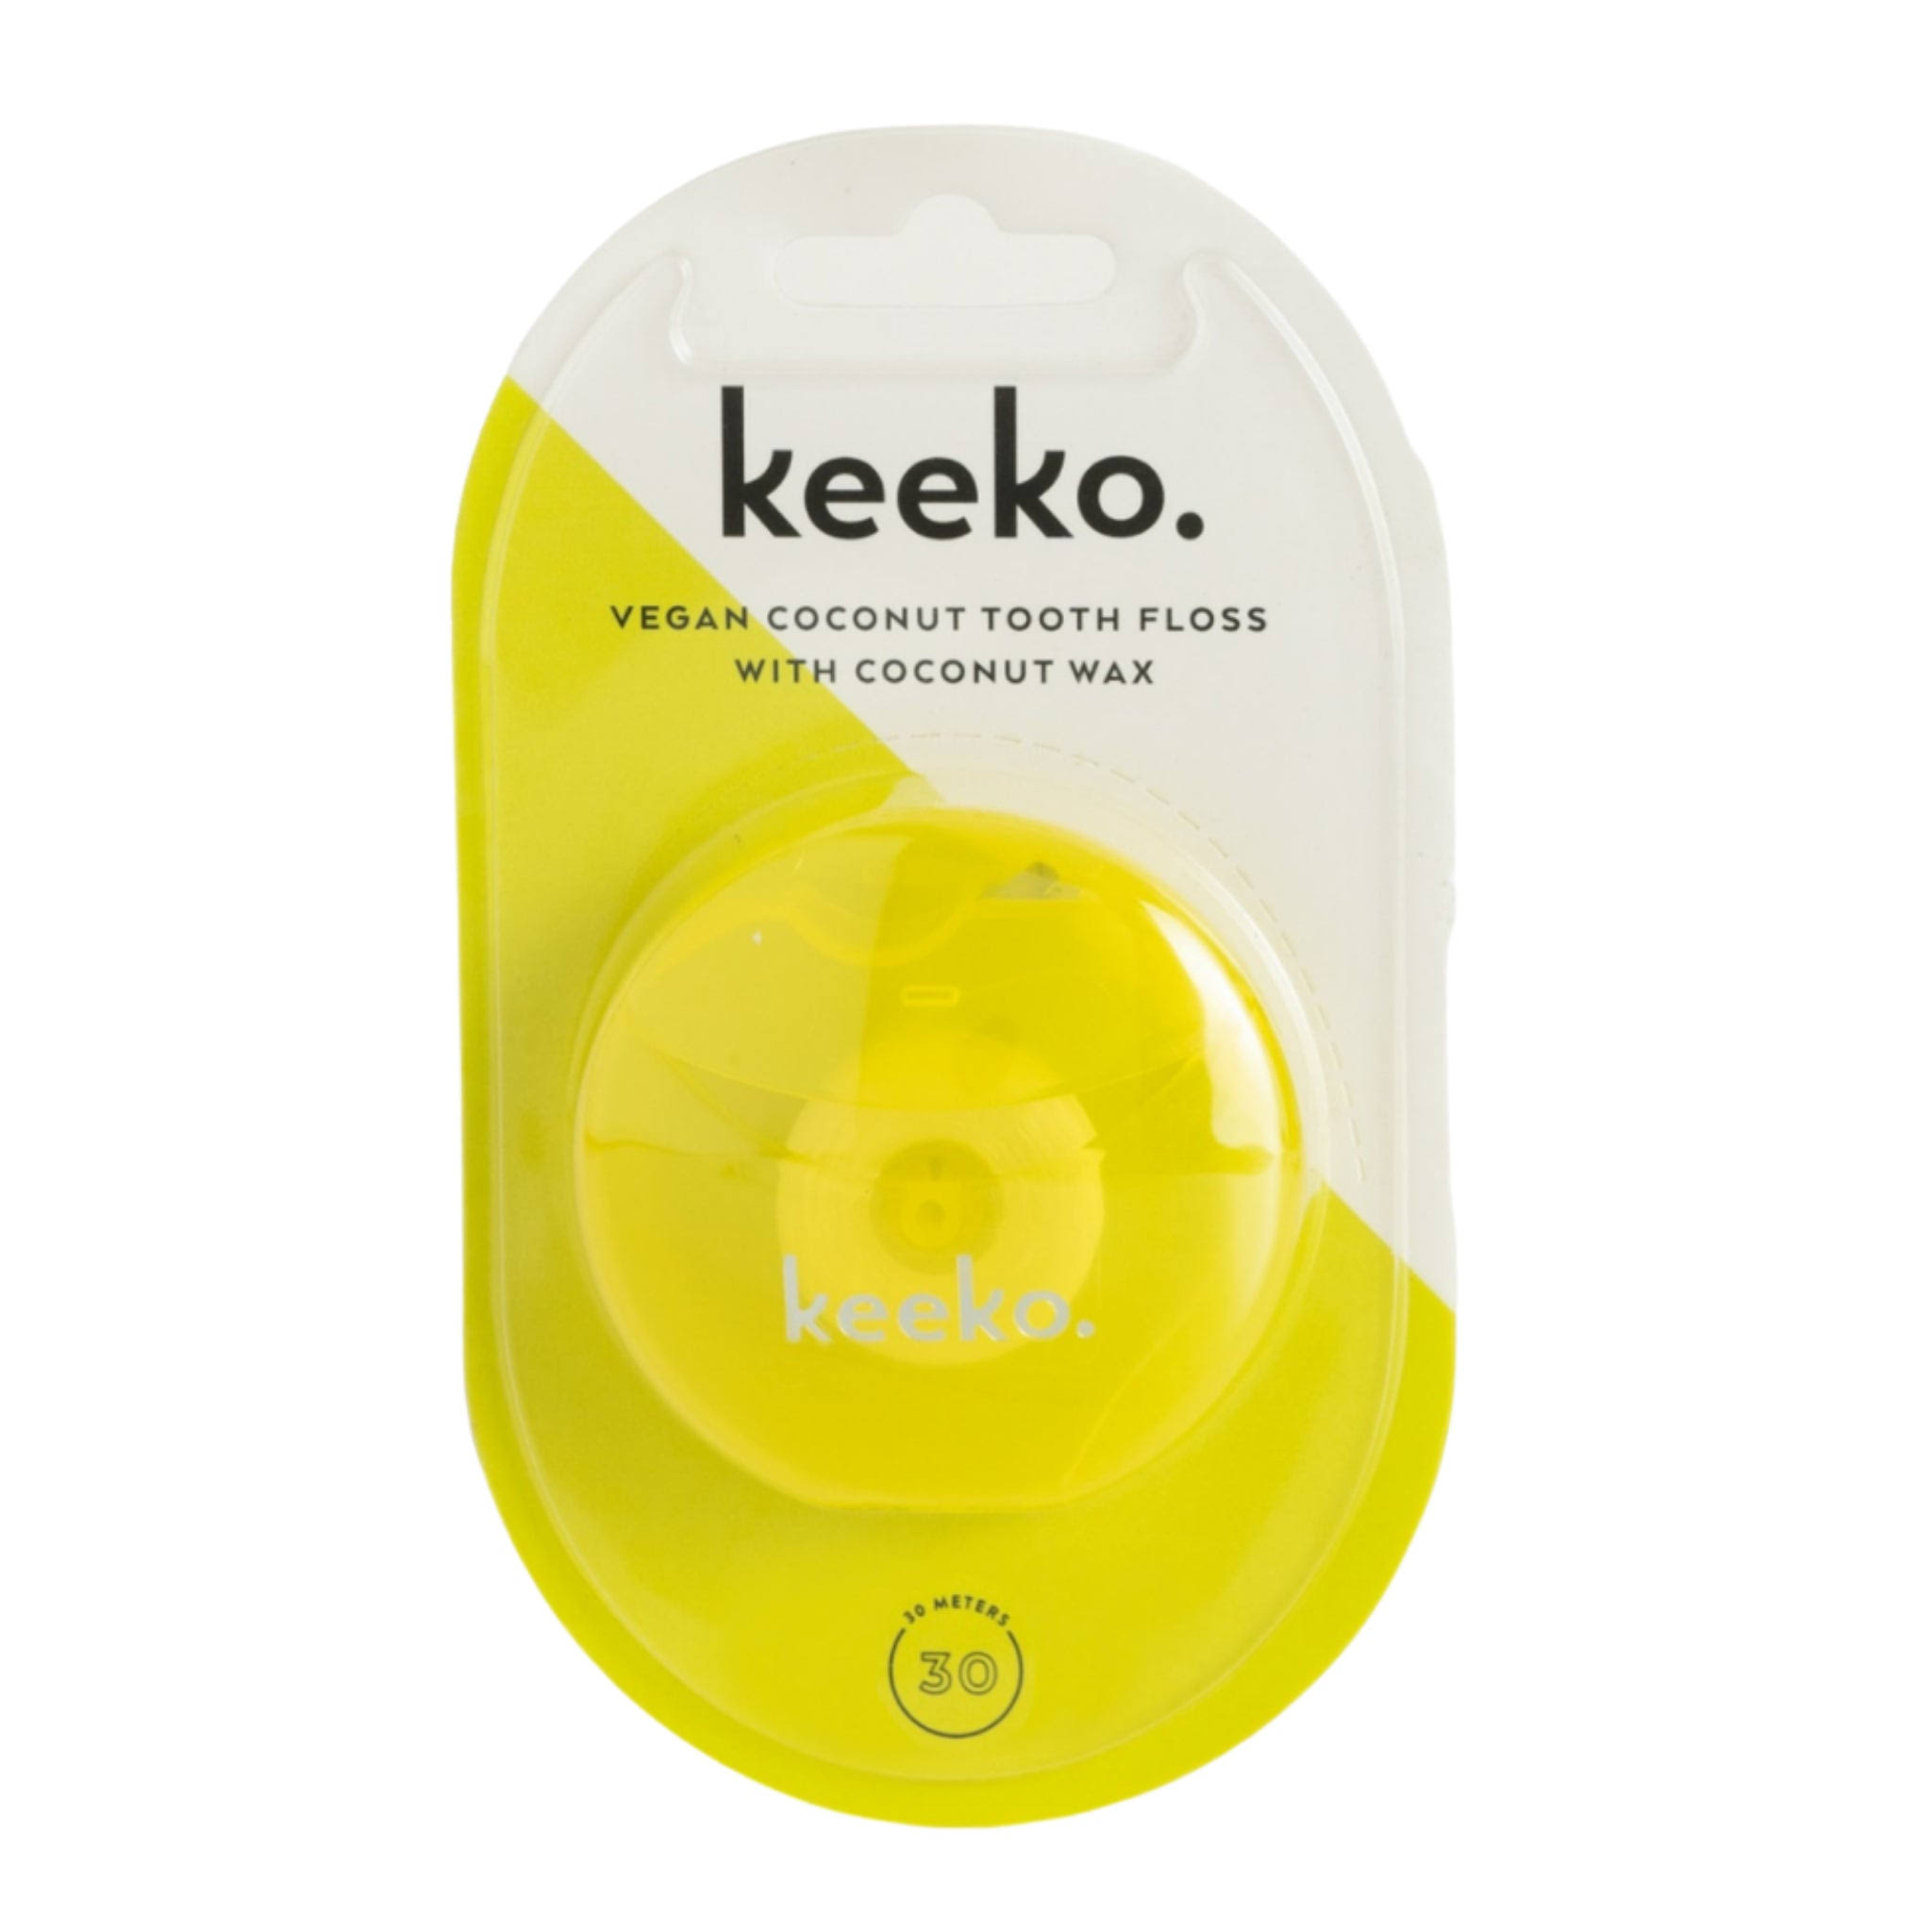 Keeko - Vegan Coconut Tooth Floss - Tooth Care